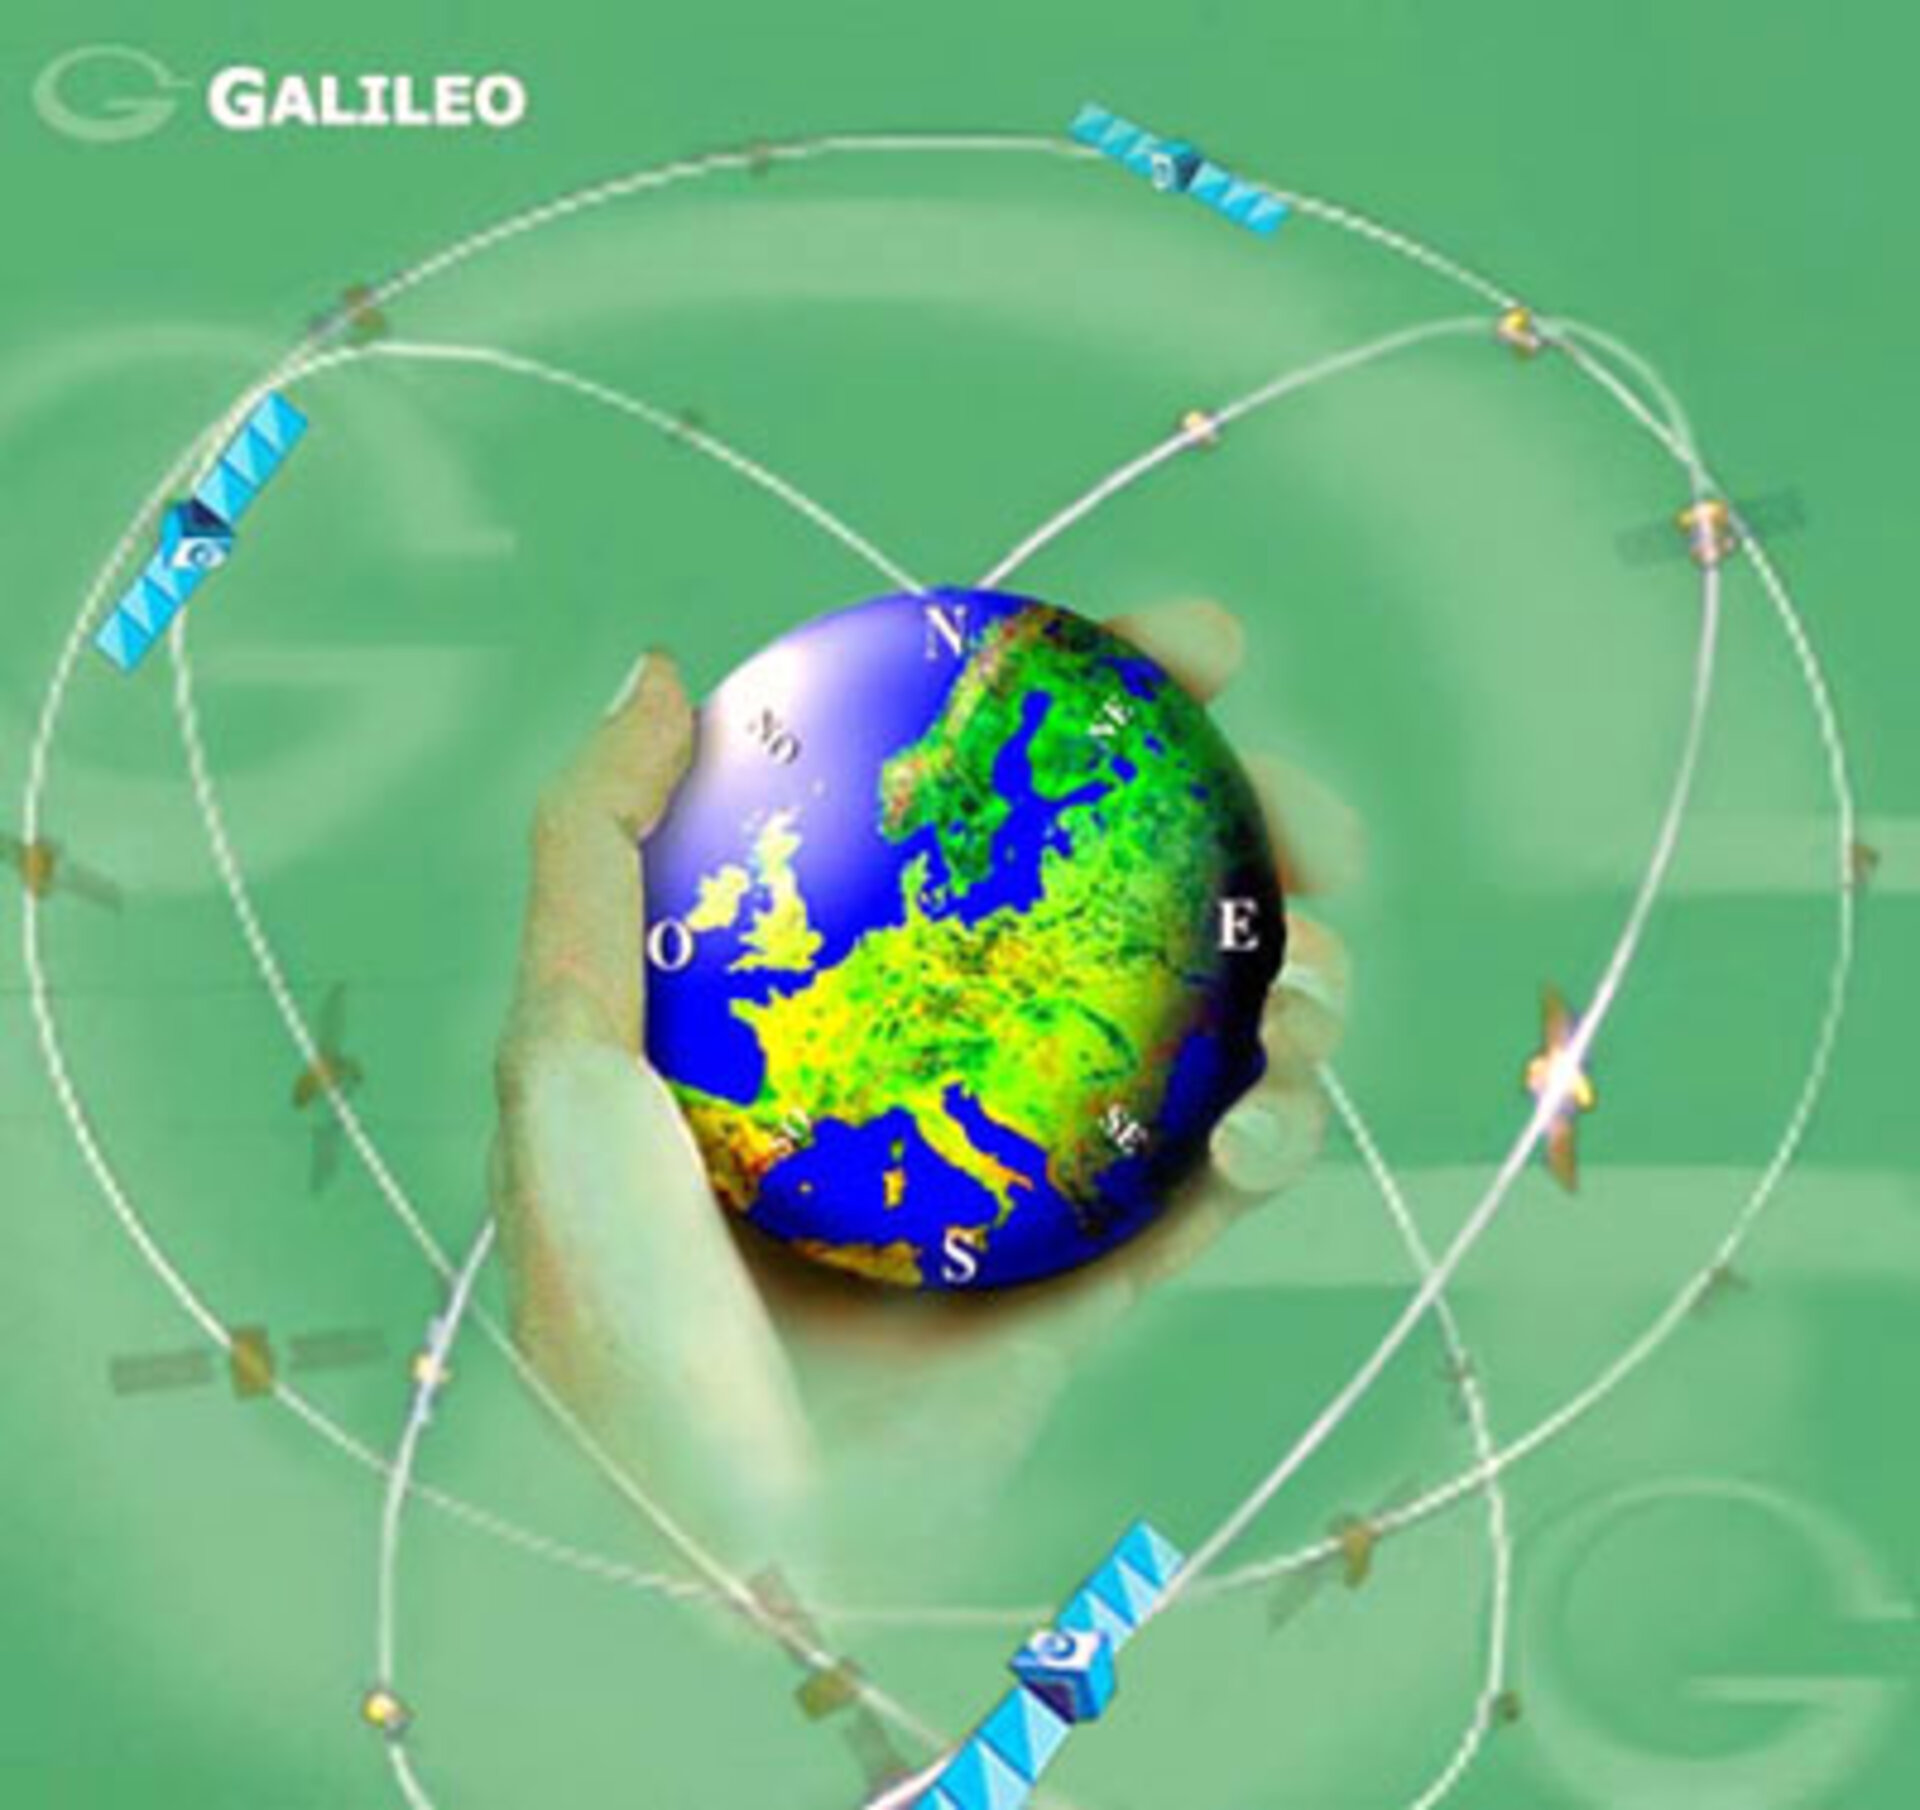 Galileo: Europe's global navigation system